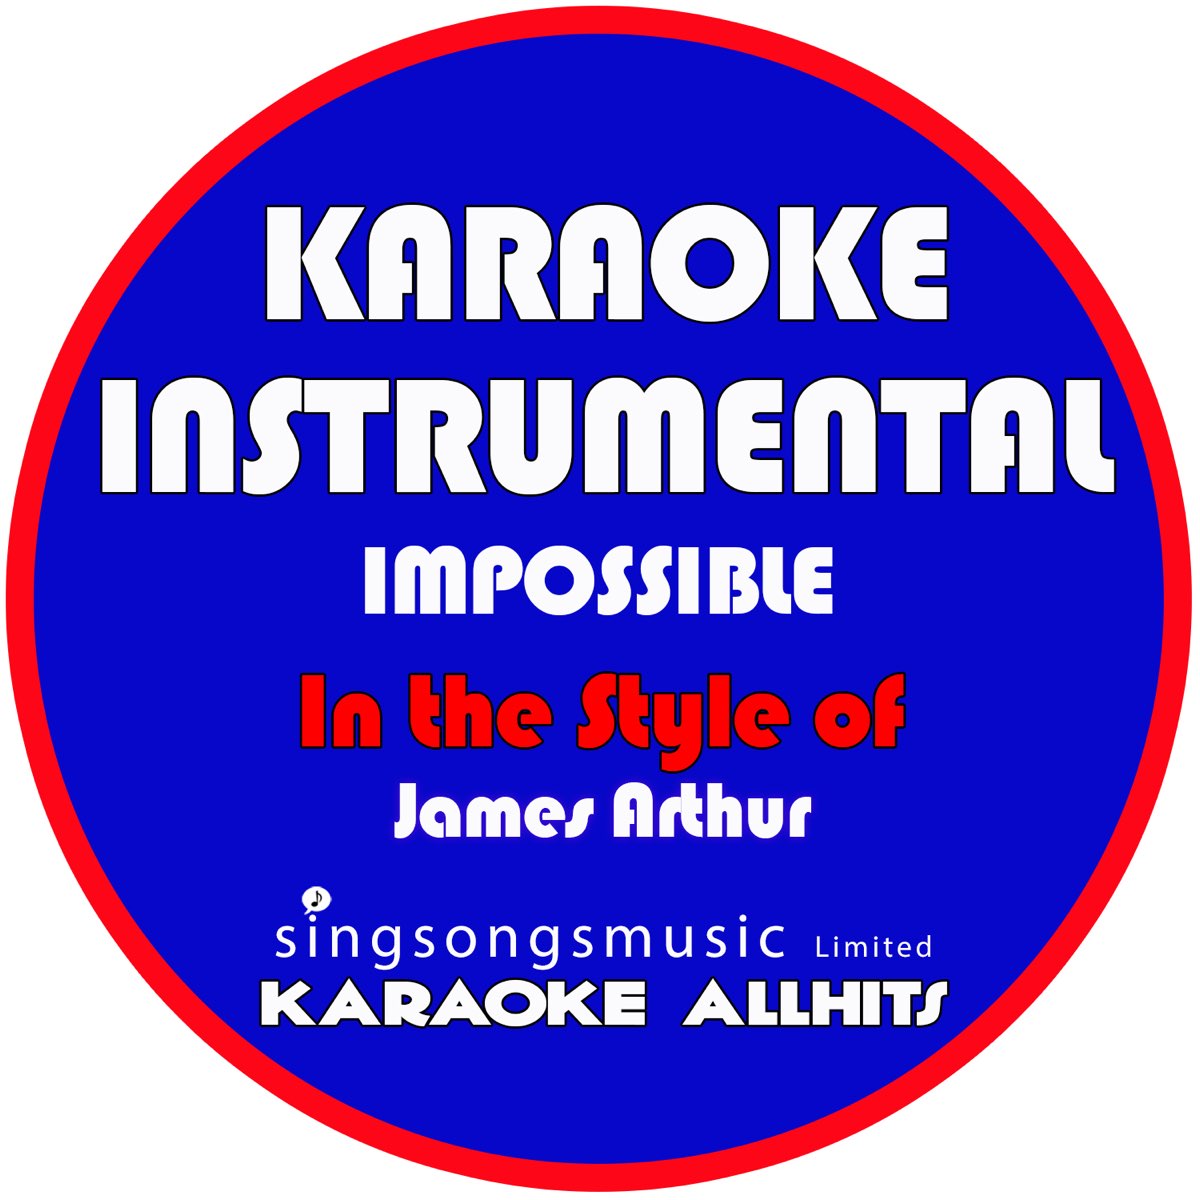 Impossible (In the Style of James Arthur) [Karaoke Instrumental Version] -  Single by Karaoke All Hits on Apple Music